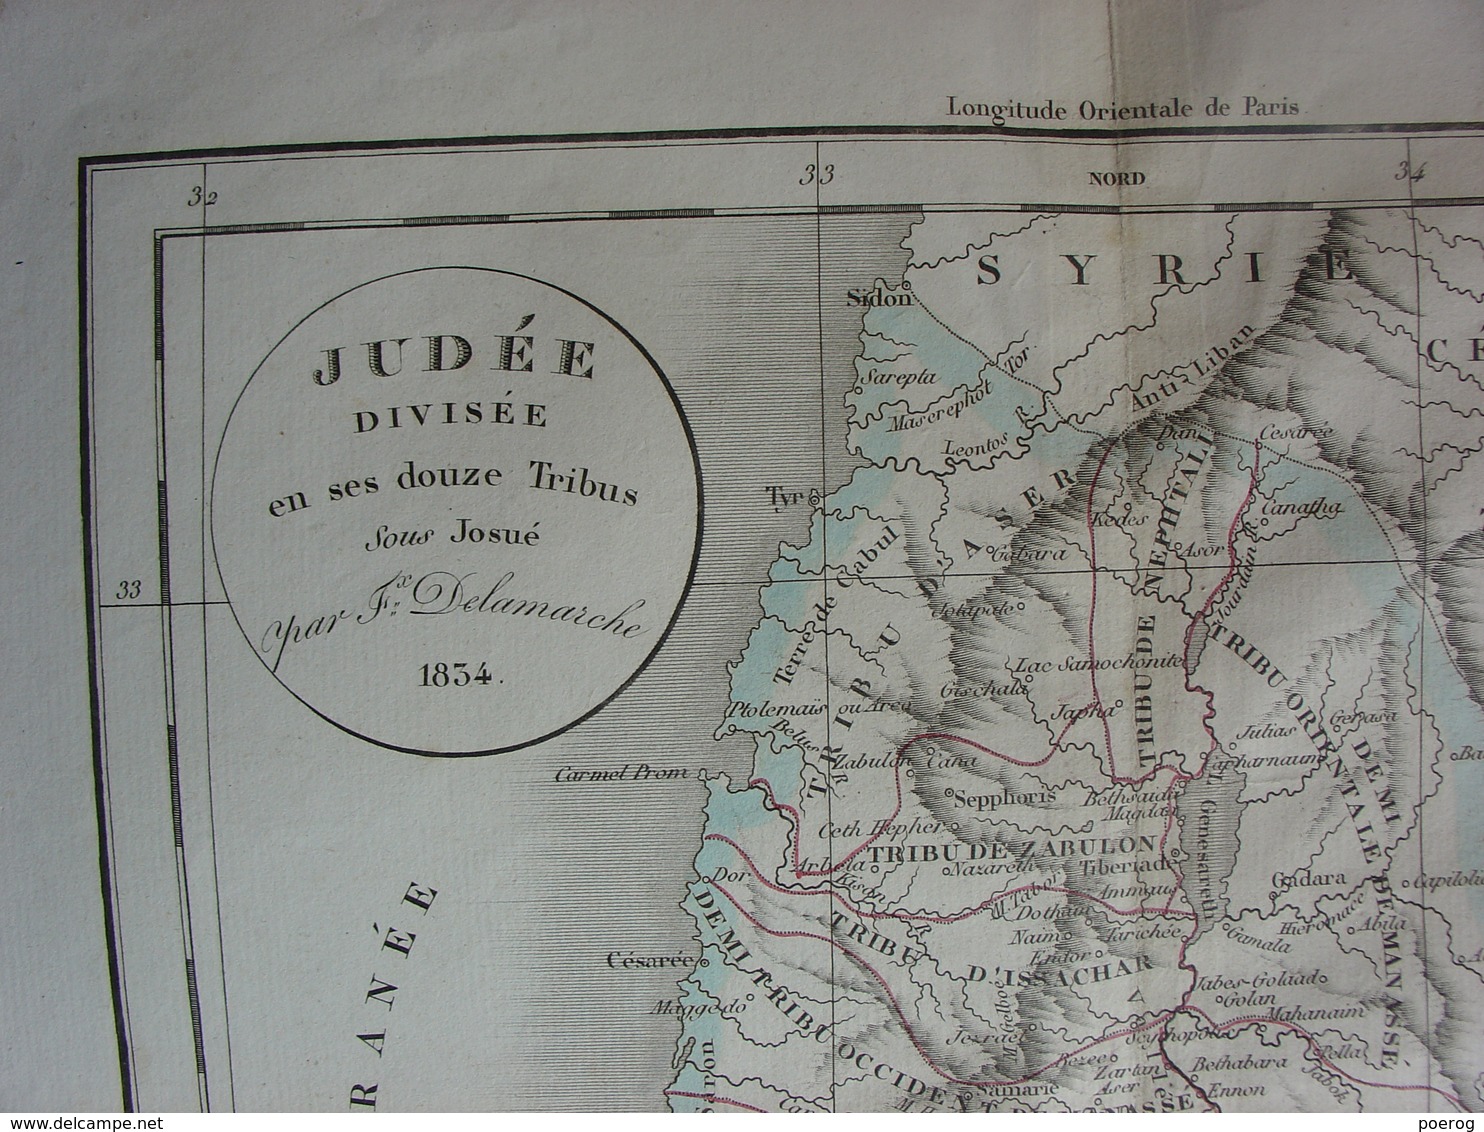 GRAVURE DE 1834 - CARTE JUDEE DIVISEE EN SES 12 TRIBUS SOUS JOSUE - DELAMARCHE - 41 X 31 - JUDEA ISRAEL JUDAICA JUIF - Cartes Géographiques